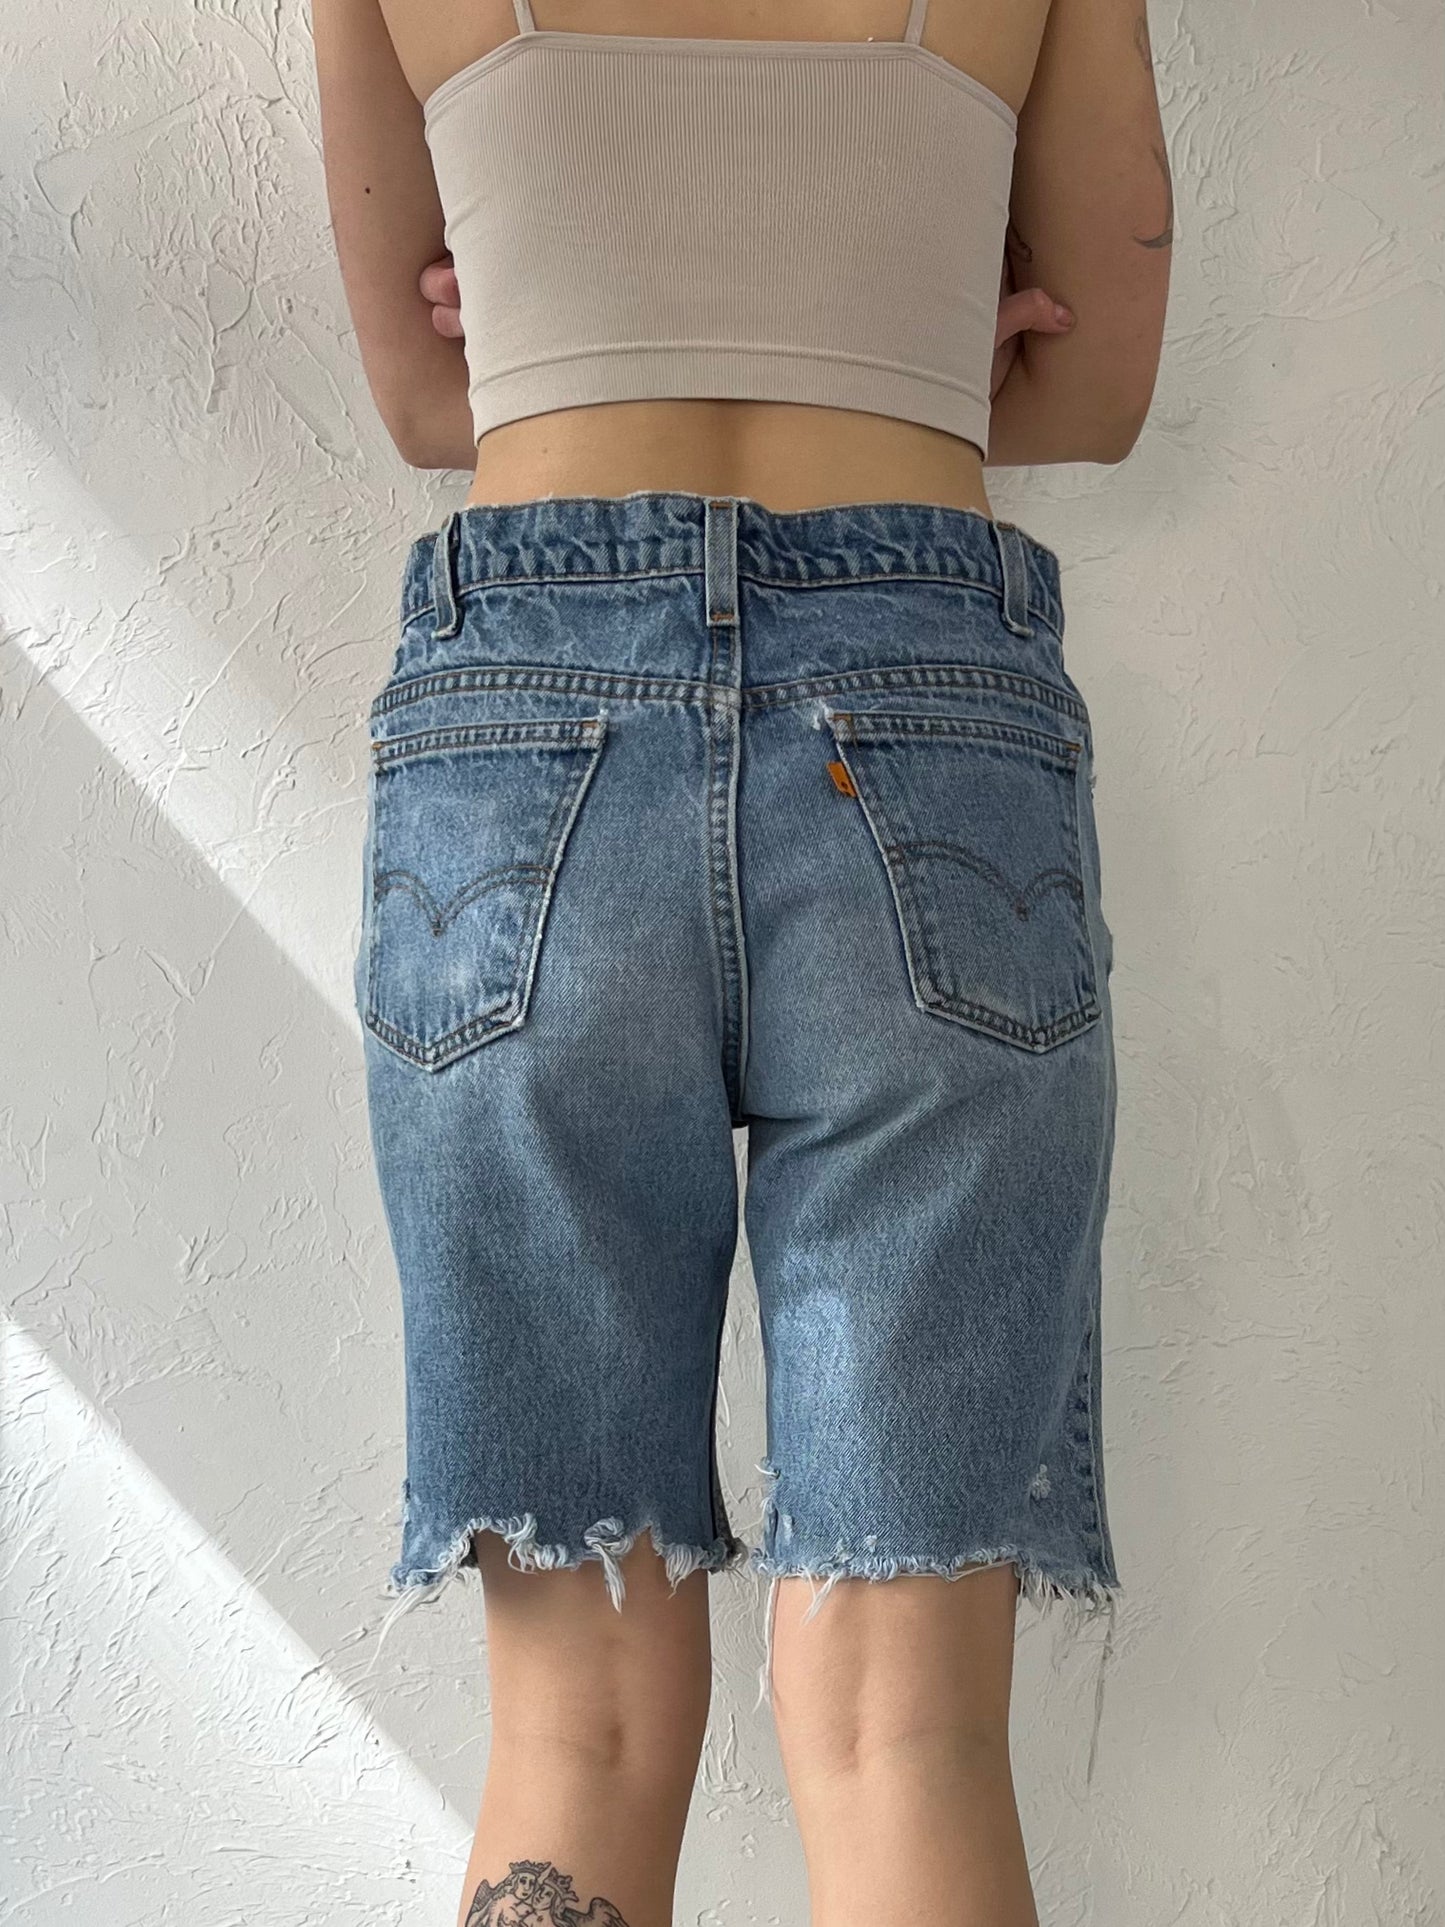 90s 'Levis' Orange Tab Denim Cut Off Shorts / Made in USA / 30"